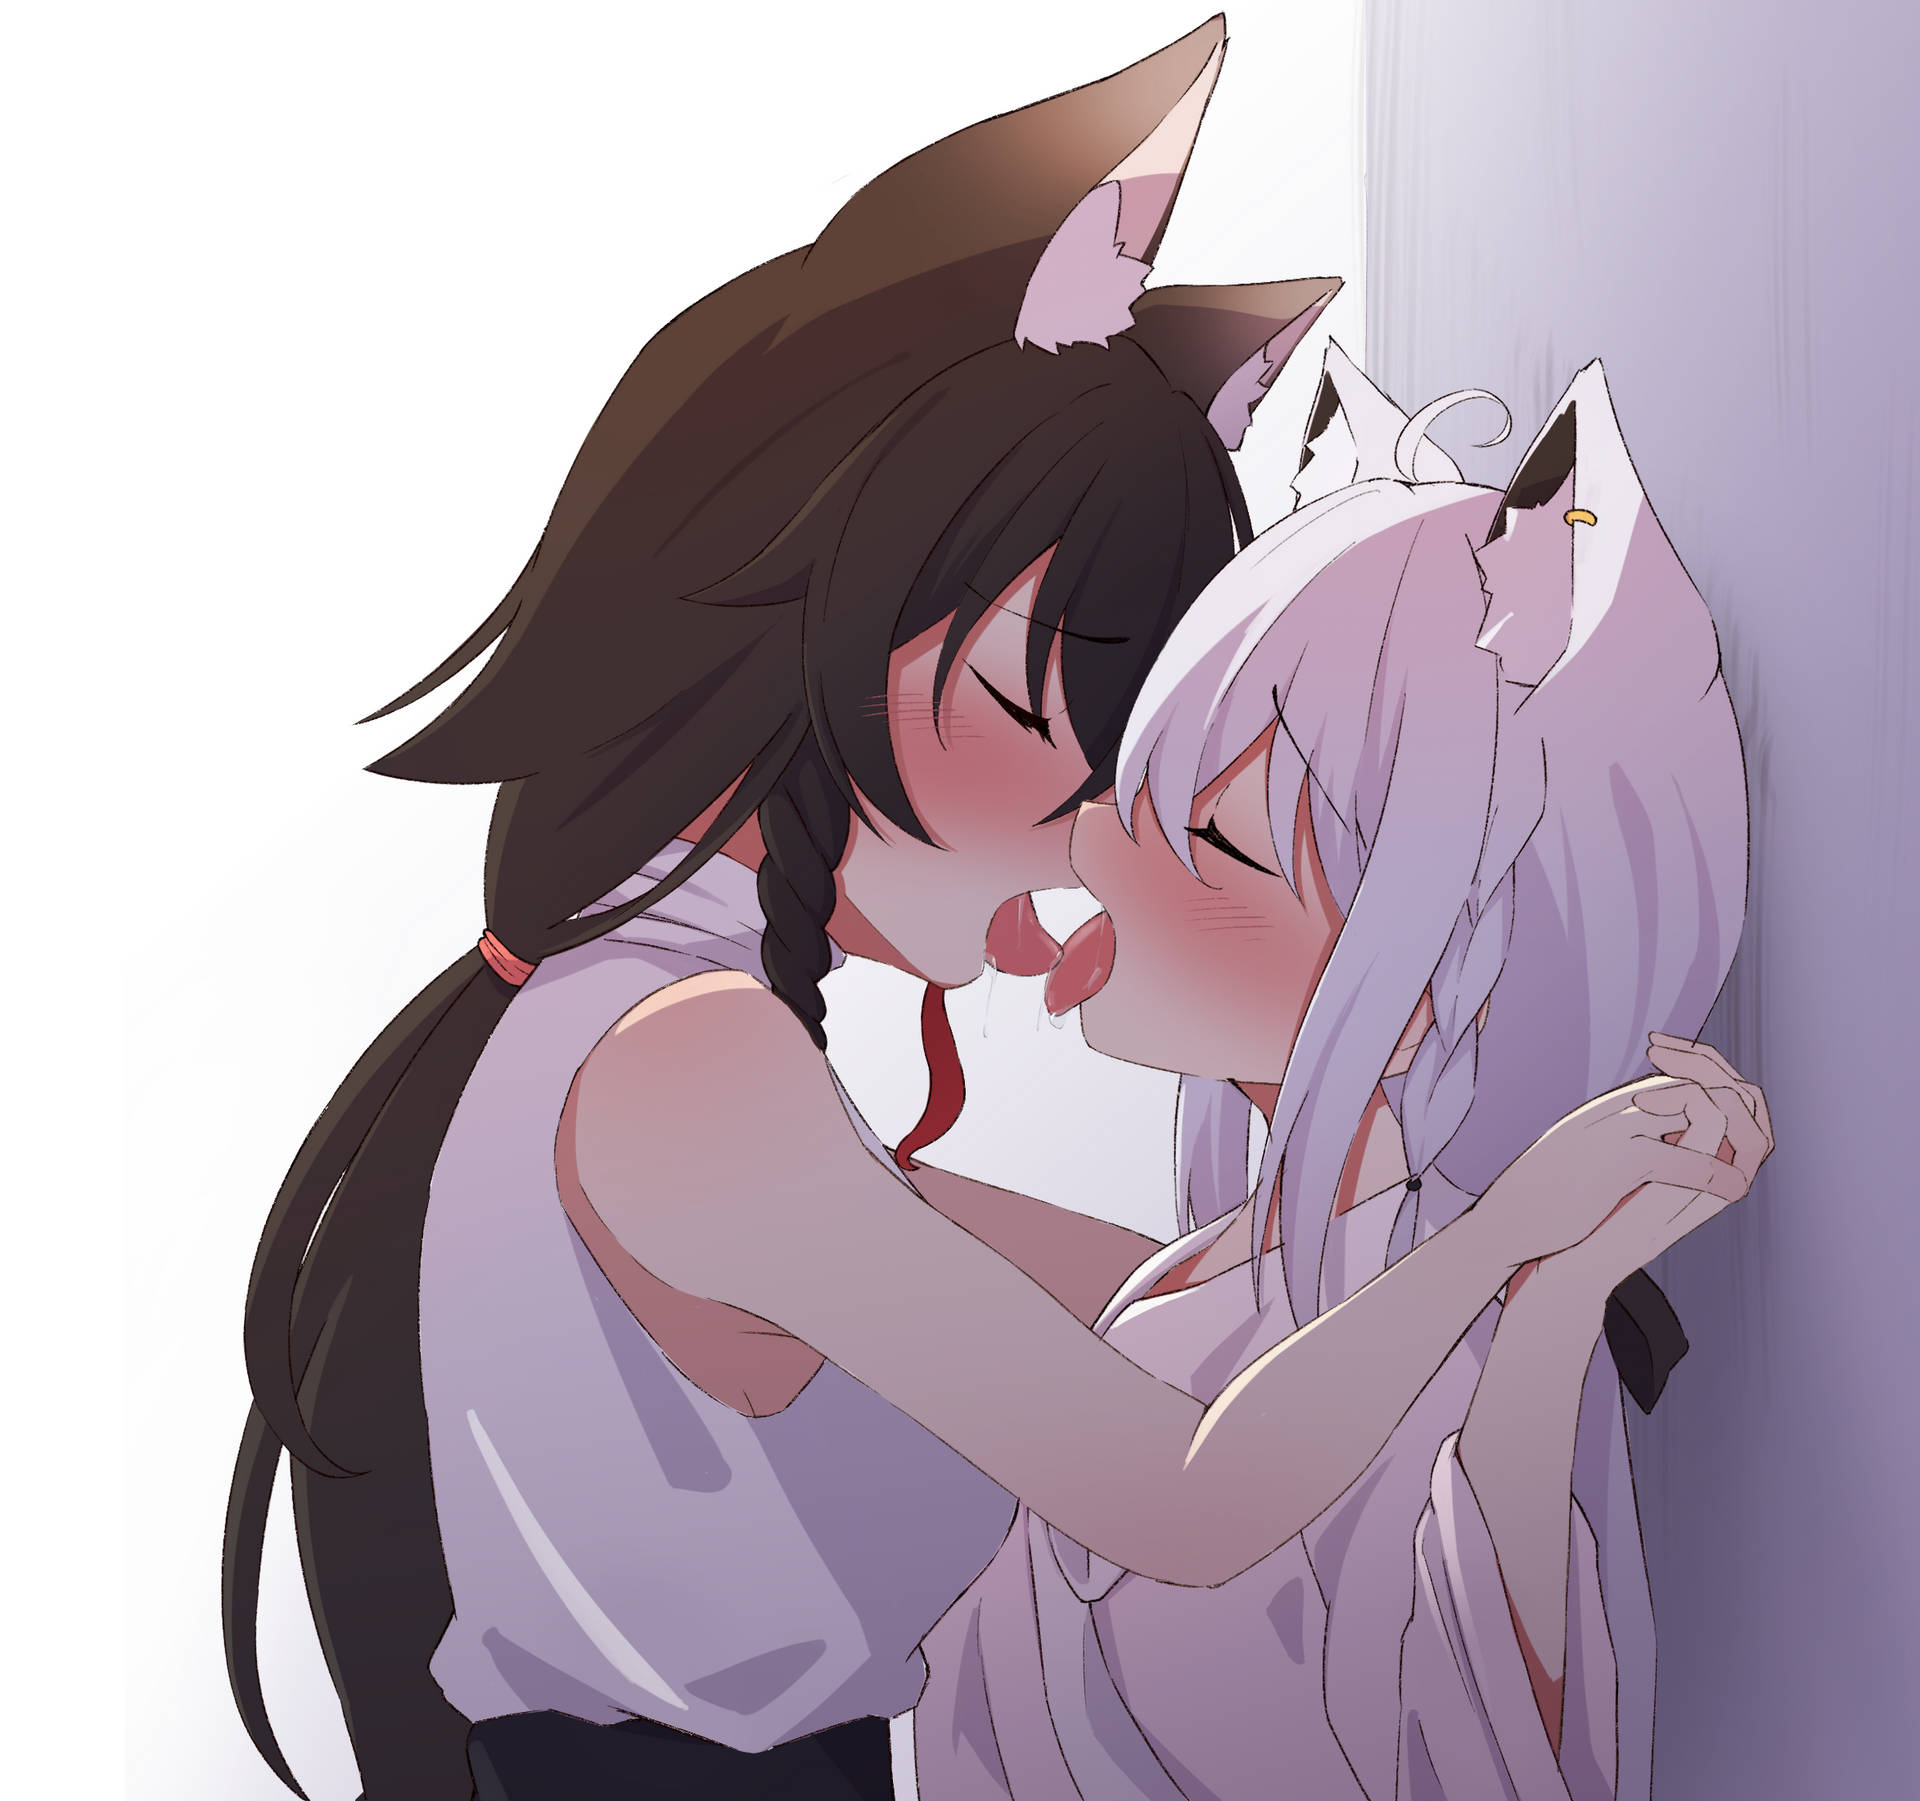 Anime Girls Kissing On Wall Wallpaper